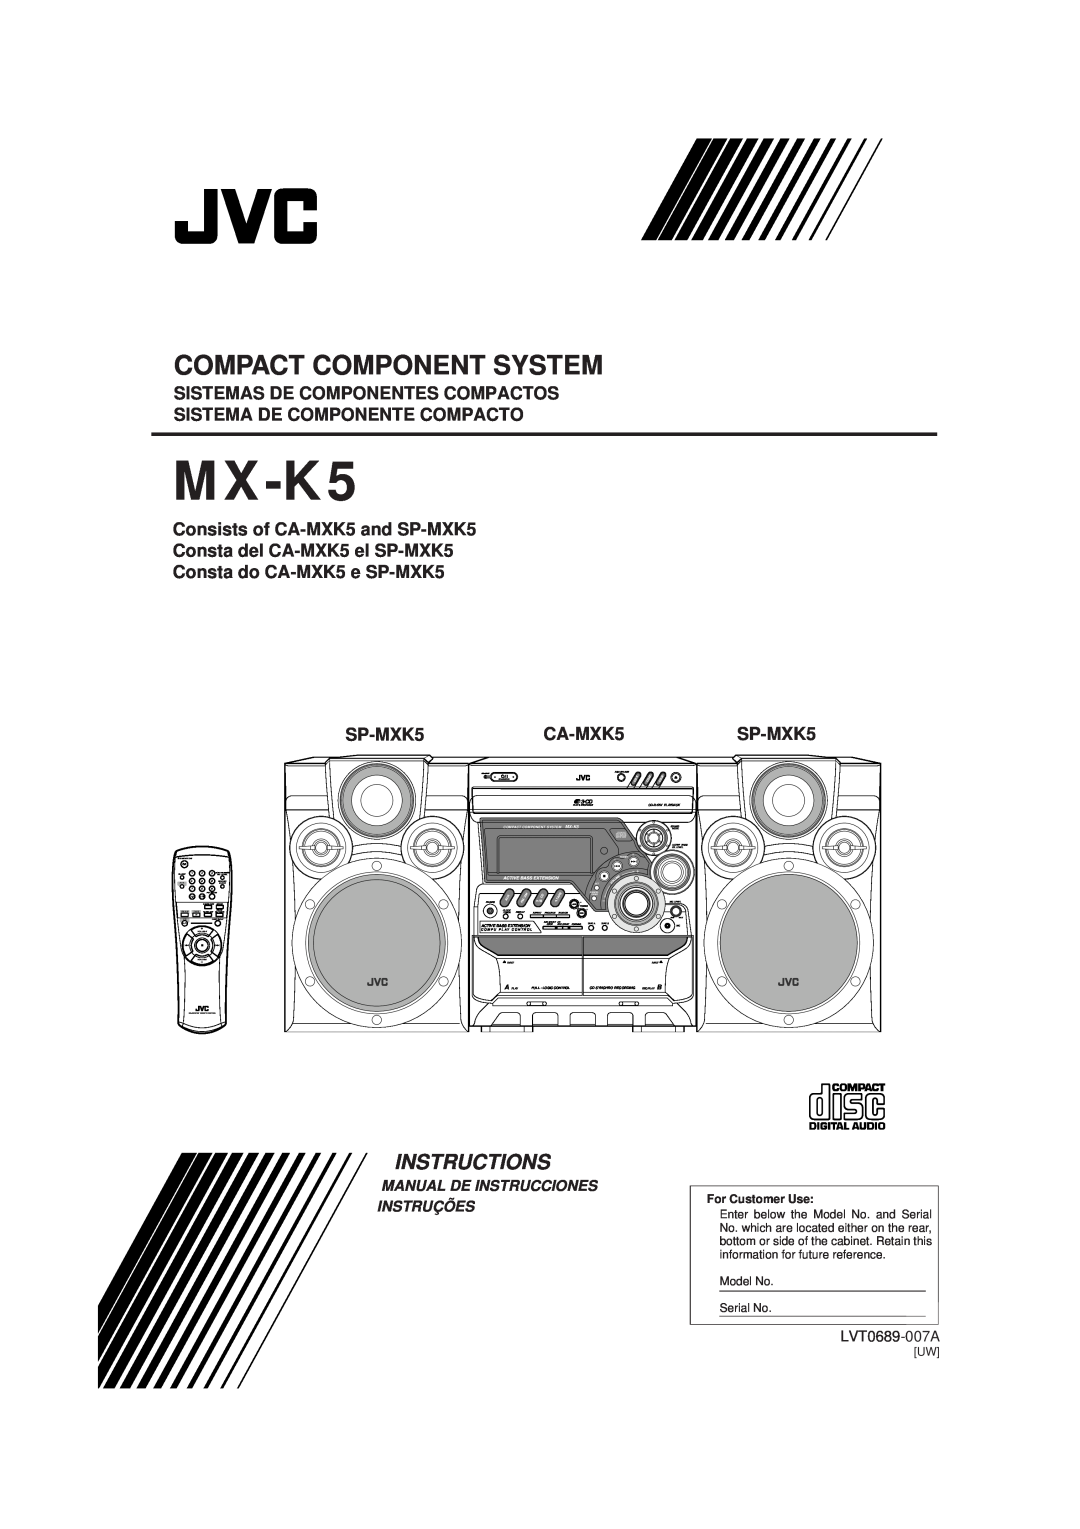 JVC MX-K5 manual Sistemas De Componentes Compactos, Sistema De Componente Compacto, Consists of CA-MXK5and SP-MXK5, Preset 